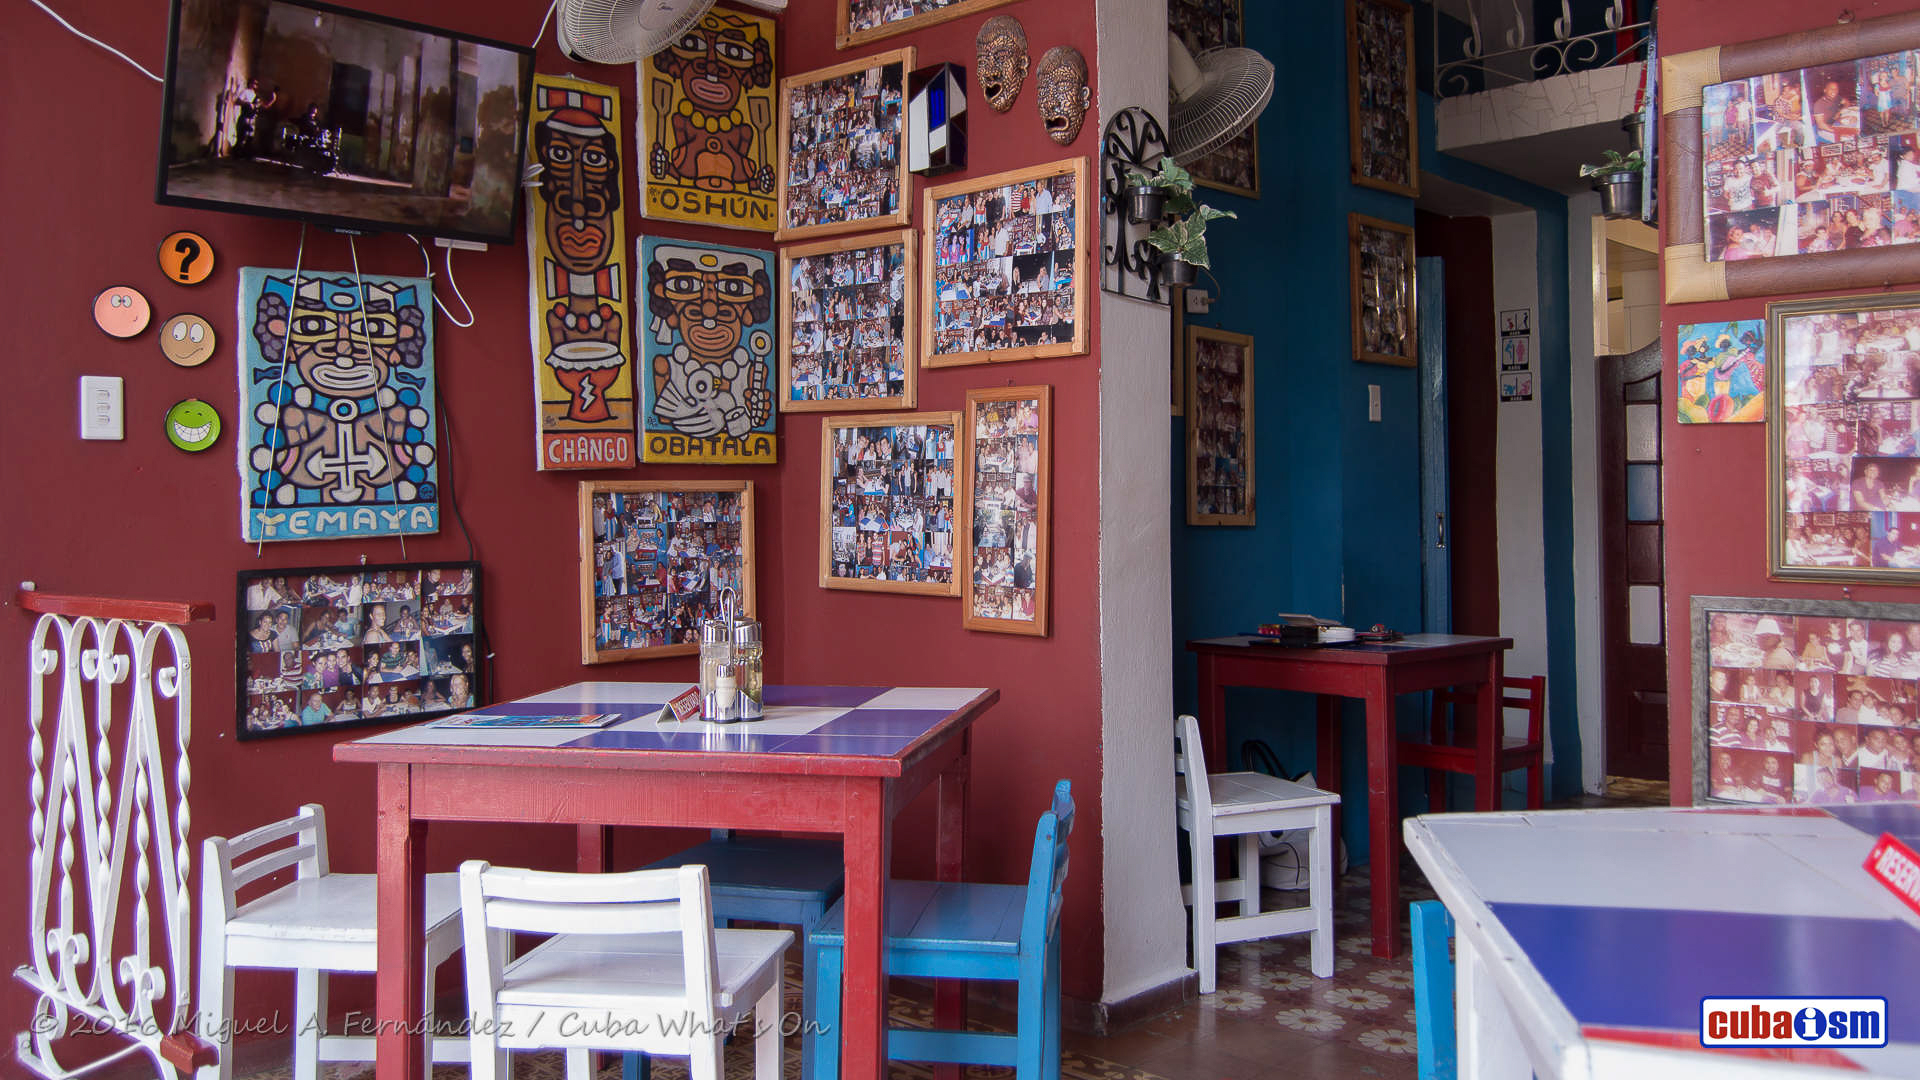 Inside of Locos X Cuba Private Restaurant